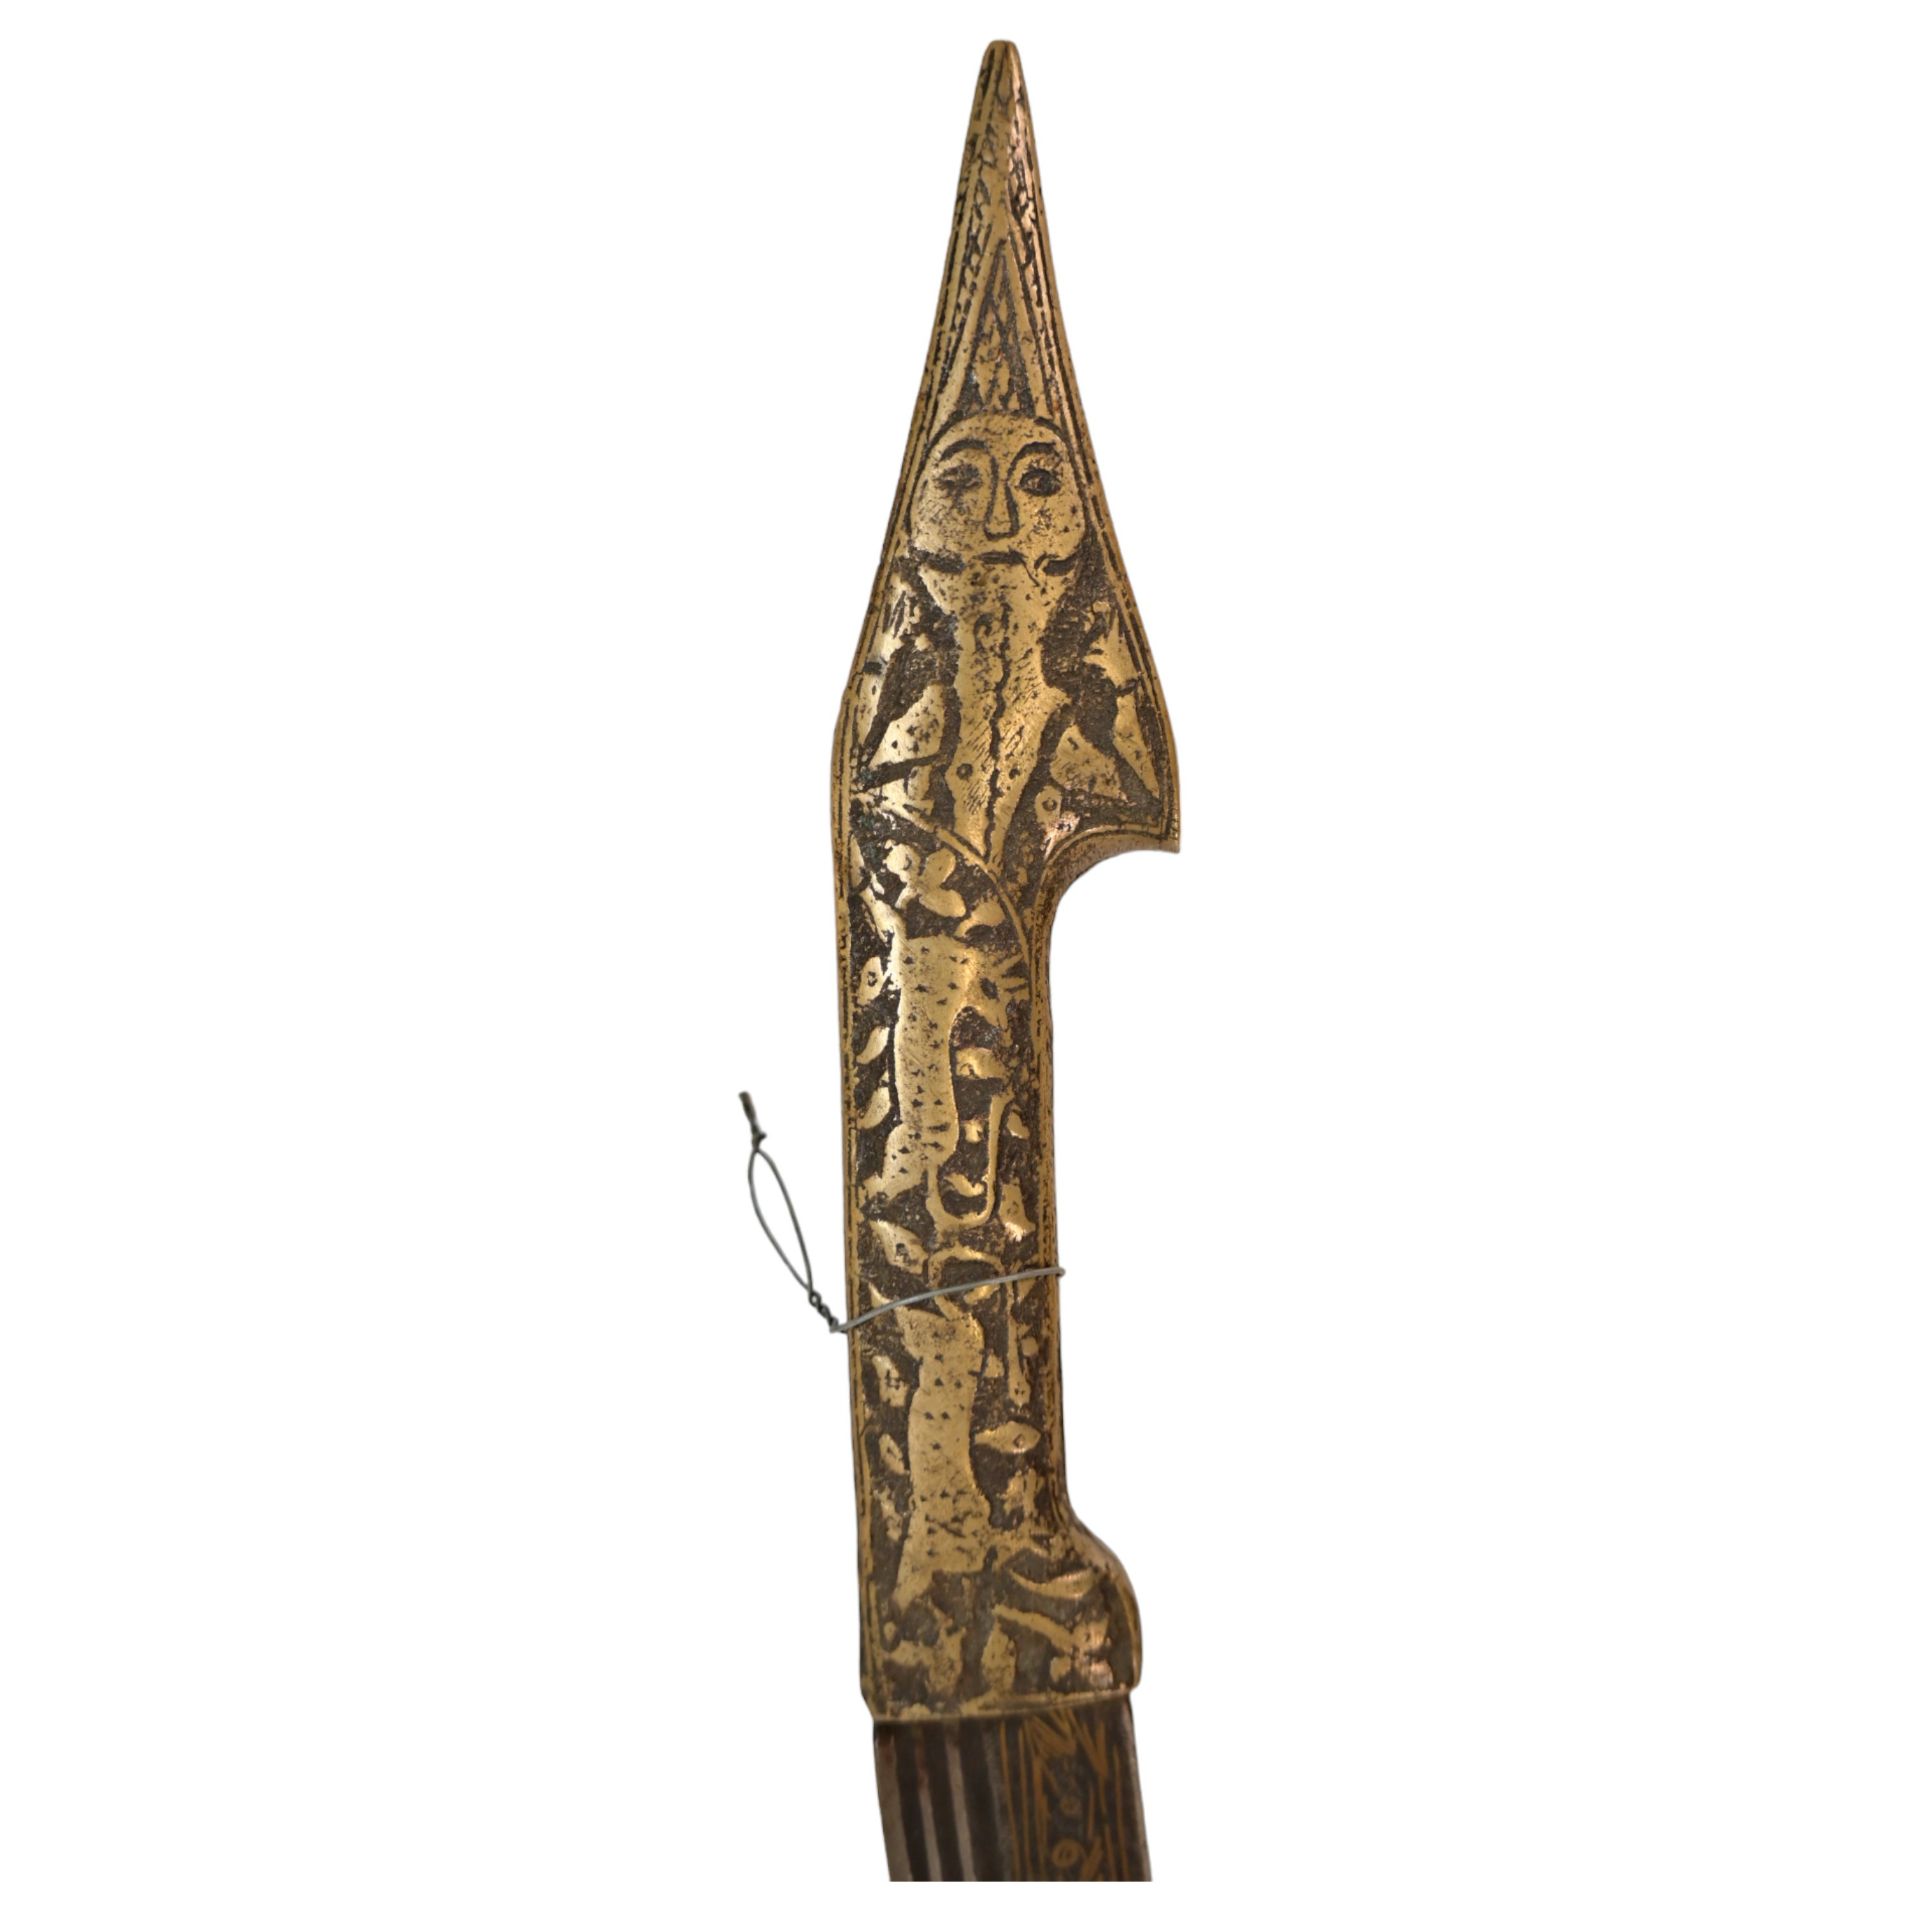 A RARE ARMENIAN YATAGHAN SWORD, GOLD INLAY, 19TH CENTURY. - Image 4 of 8